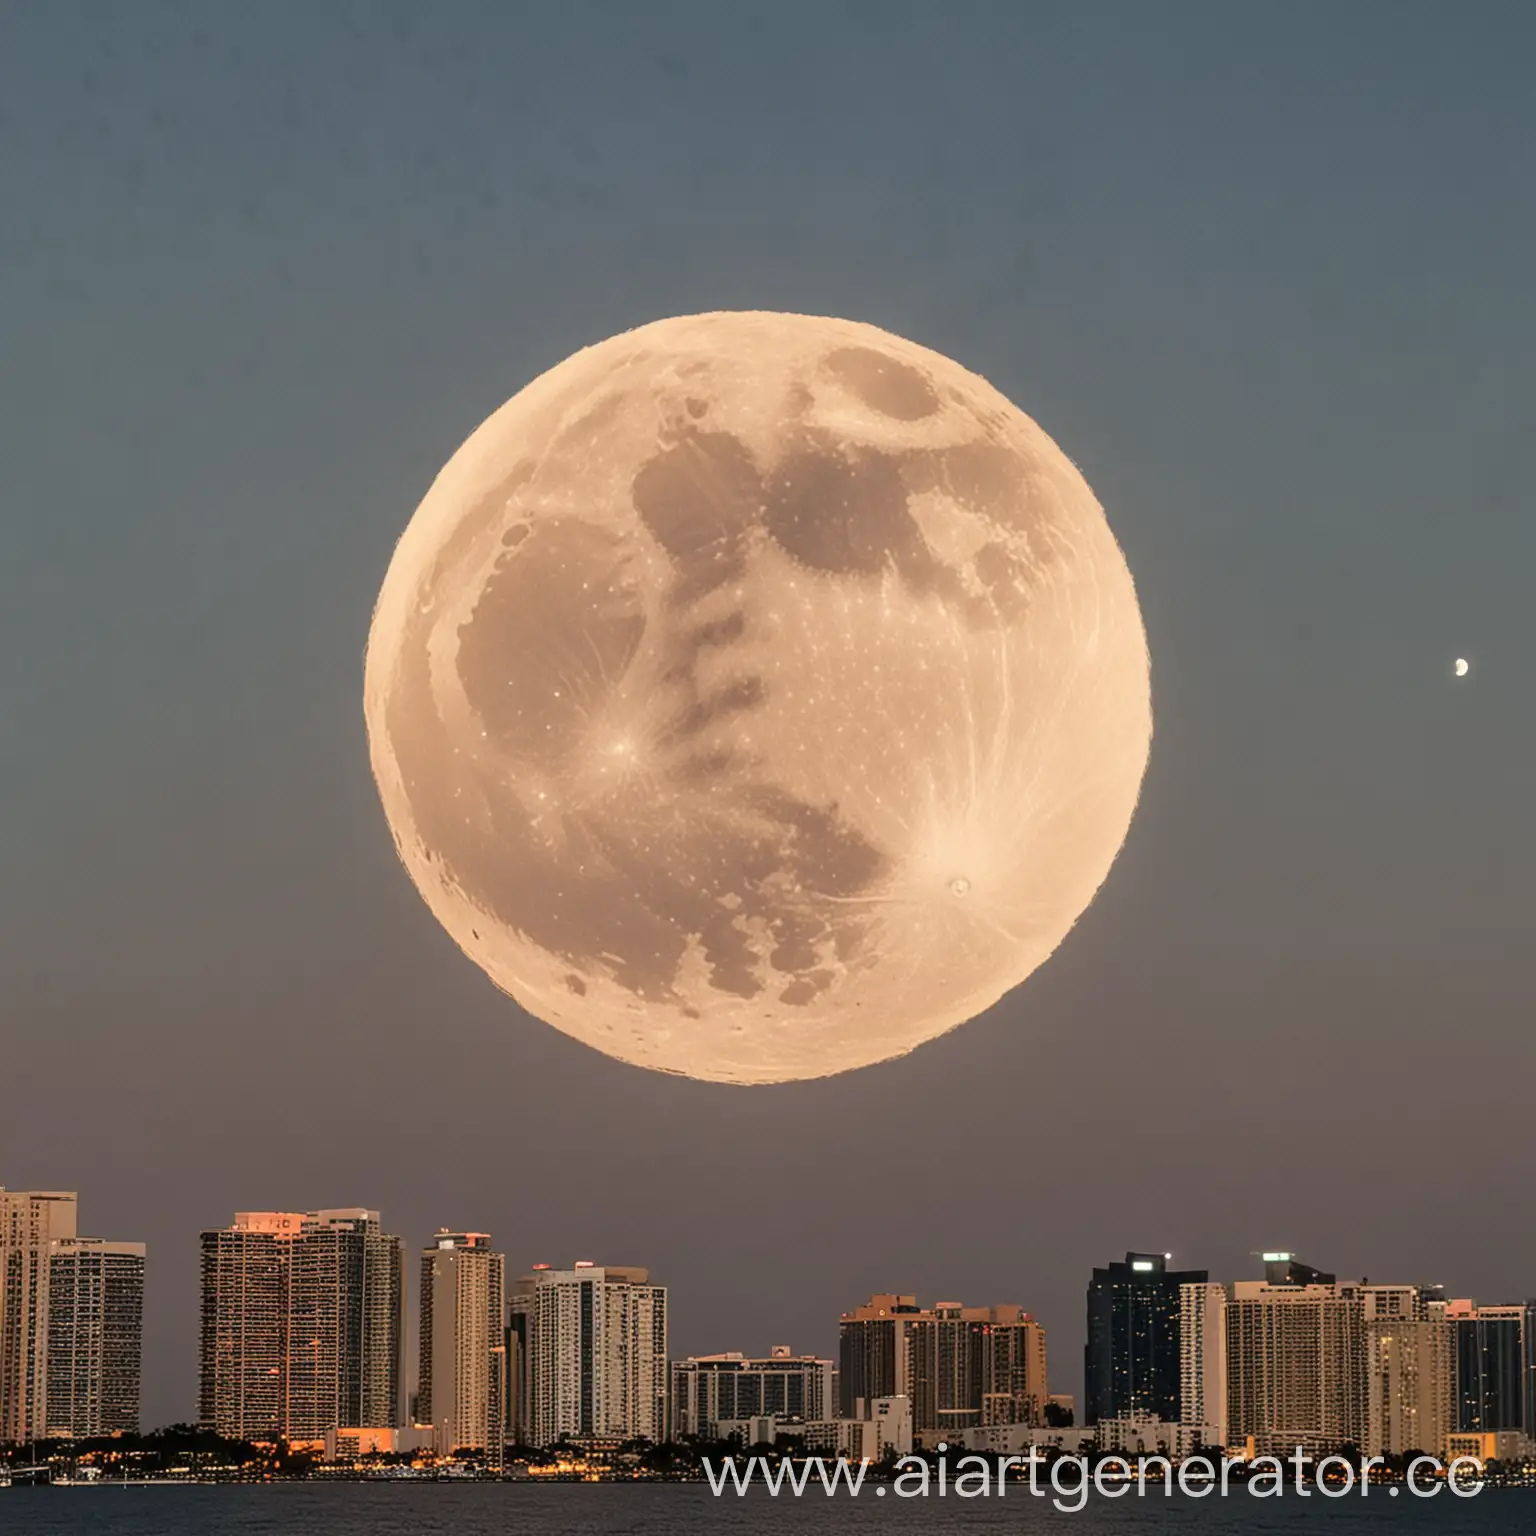 The moon of Miami